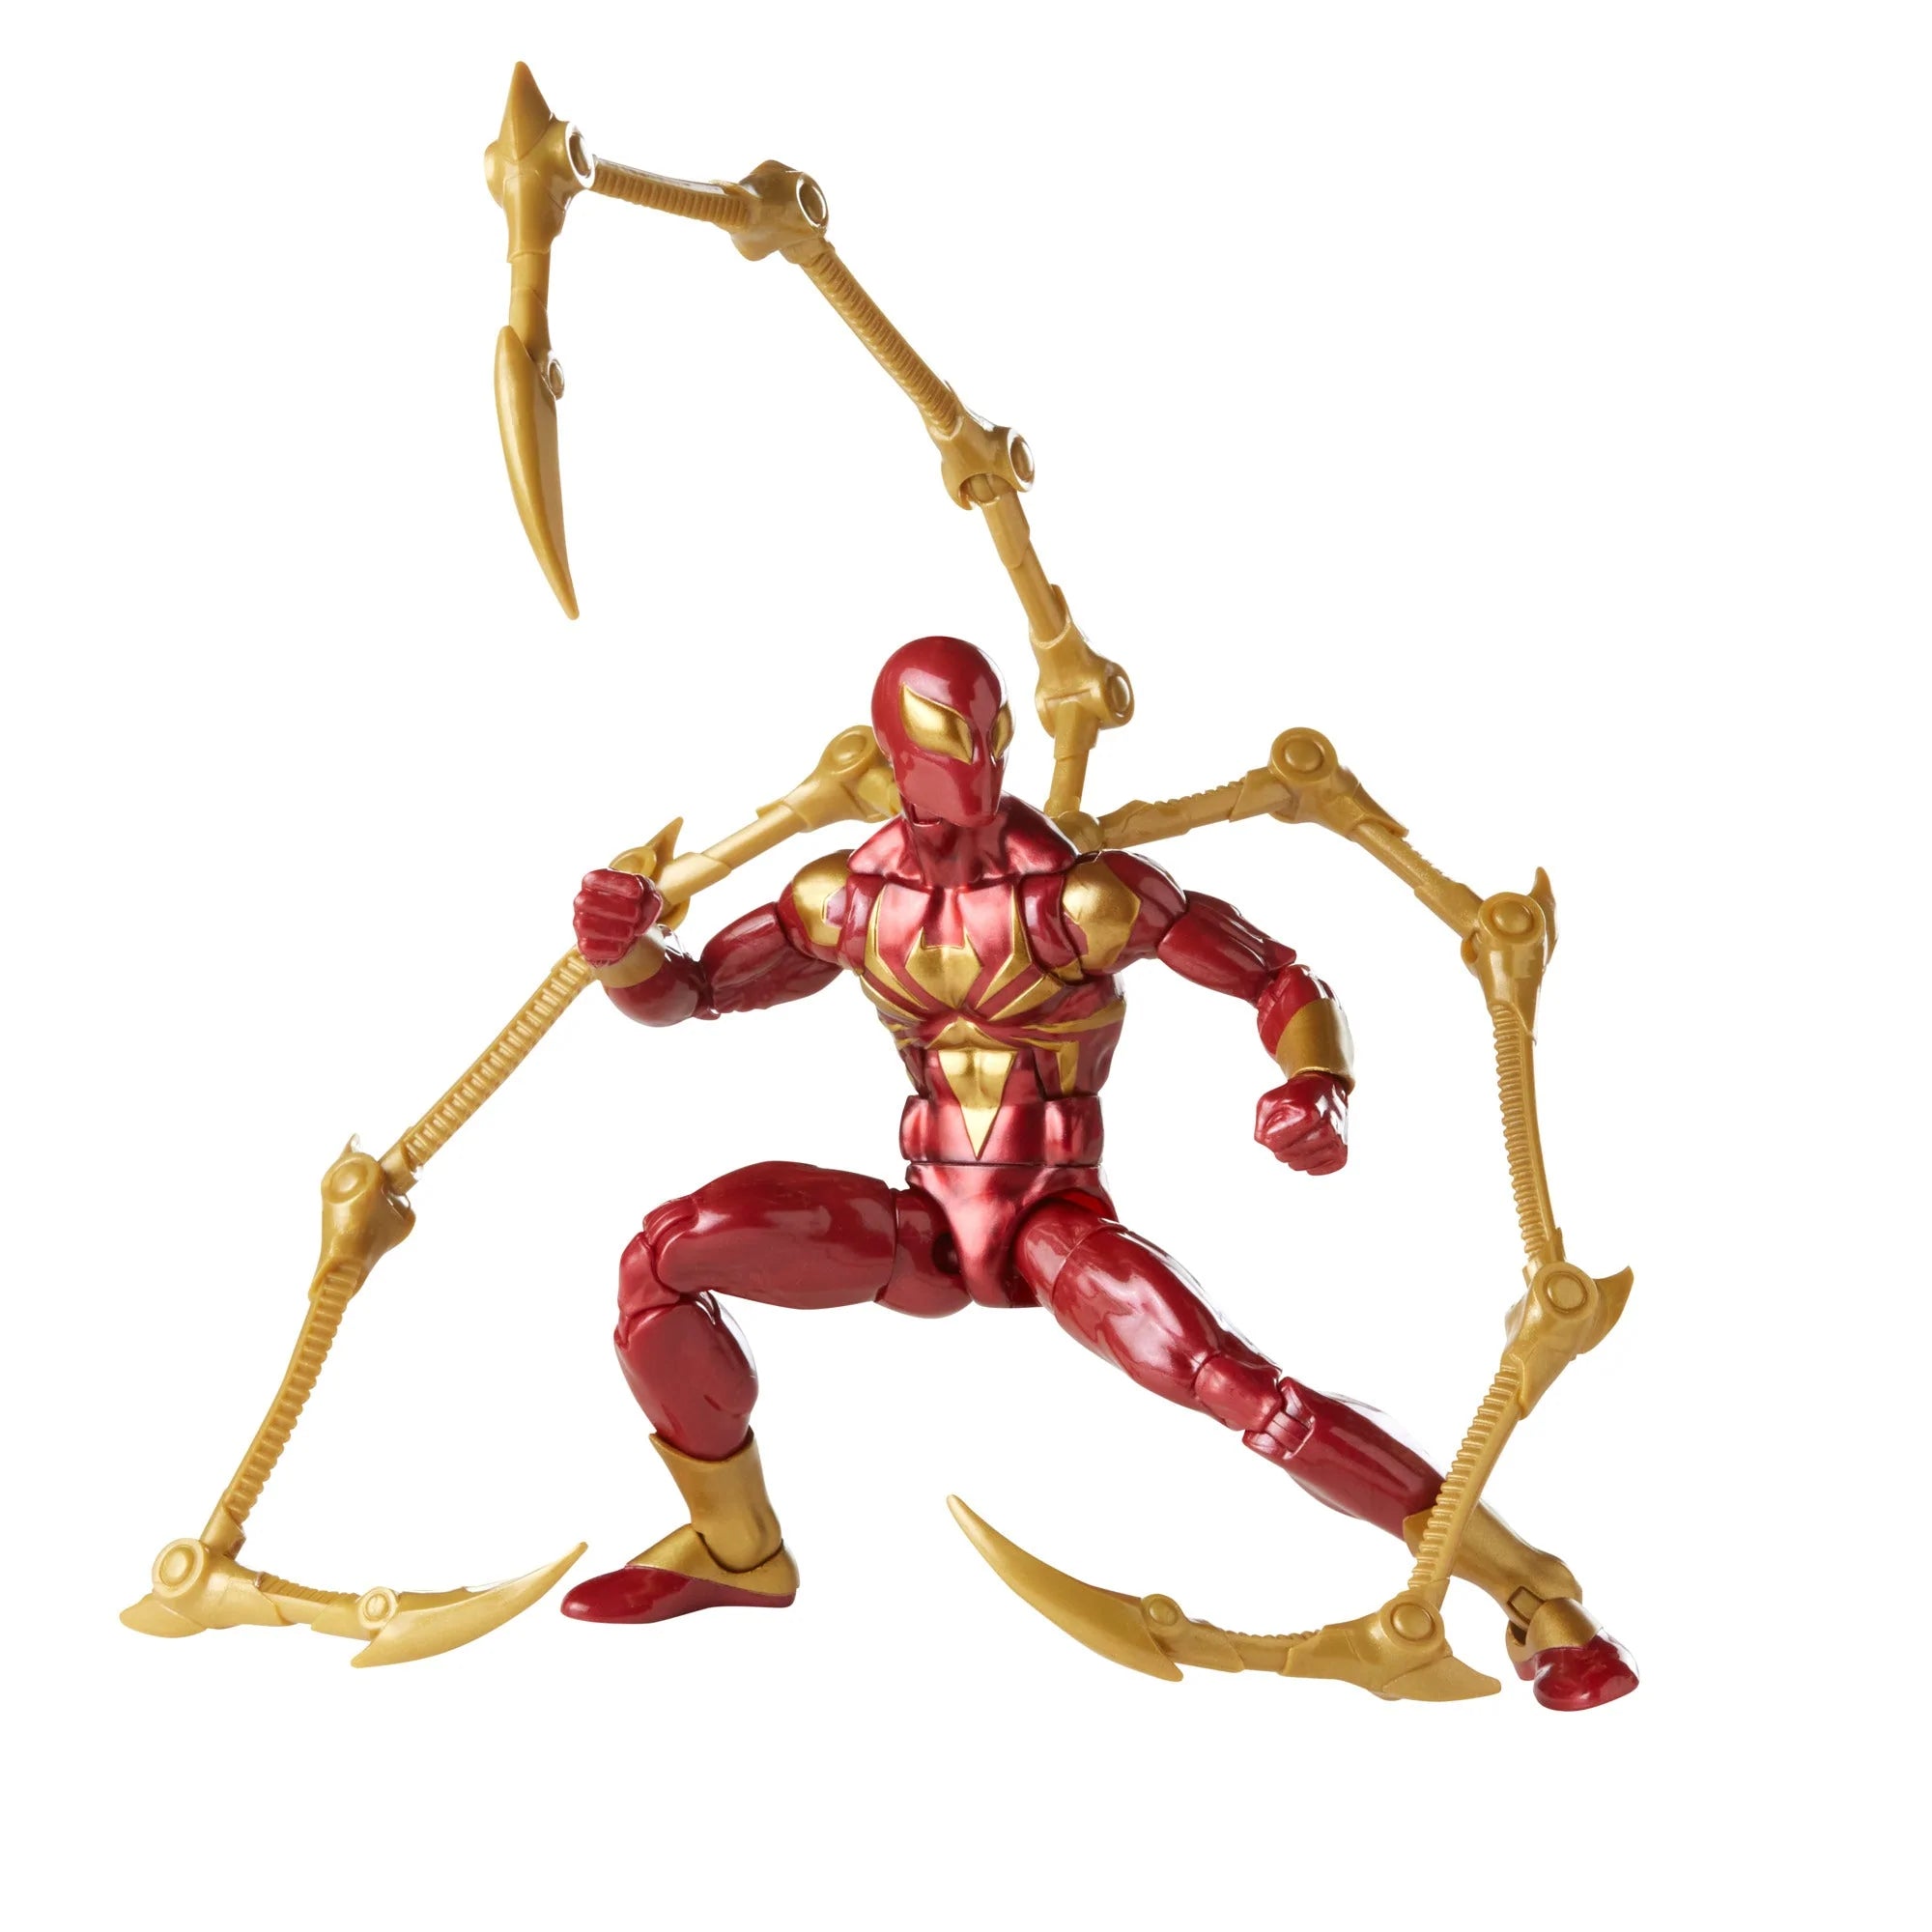 Hasbro - Marvel Legends Series - Iron Spider Action Figures 15 cm